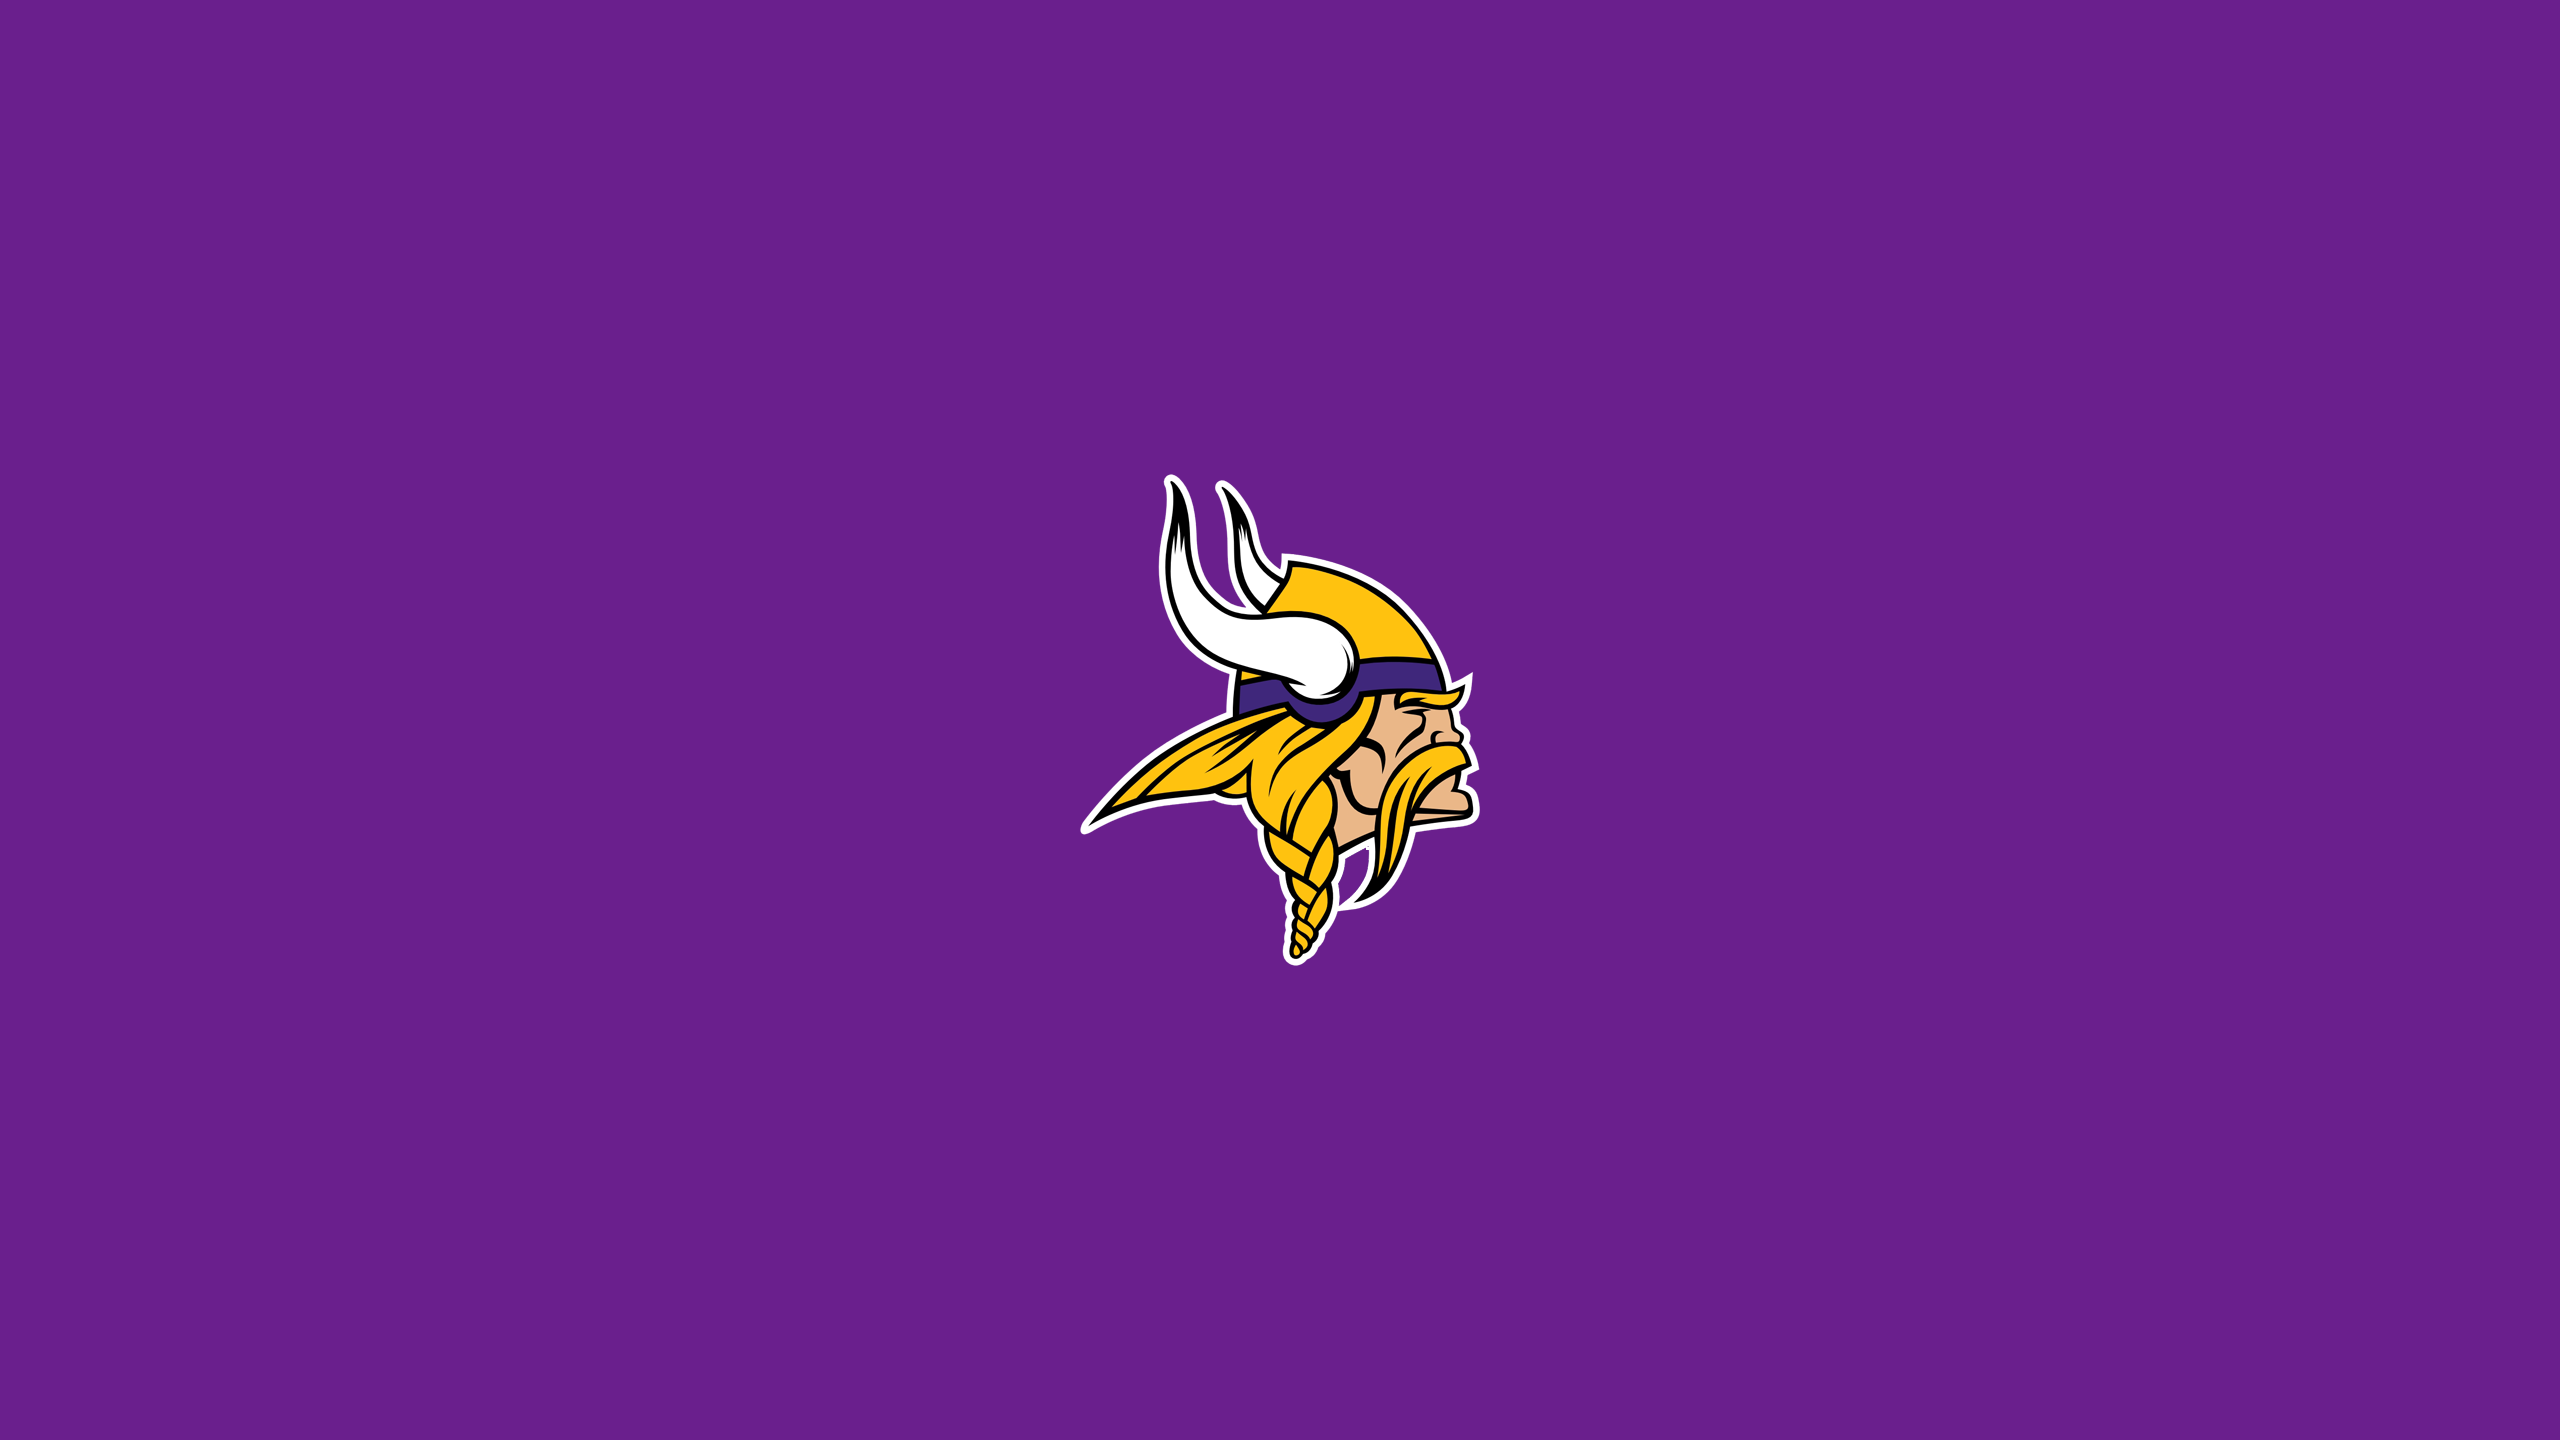 Minnesota Vikings - NFL - Square Bettor